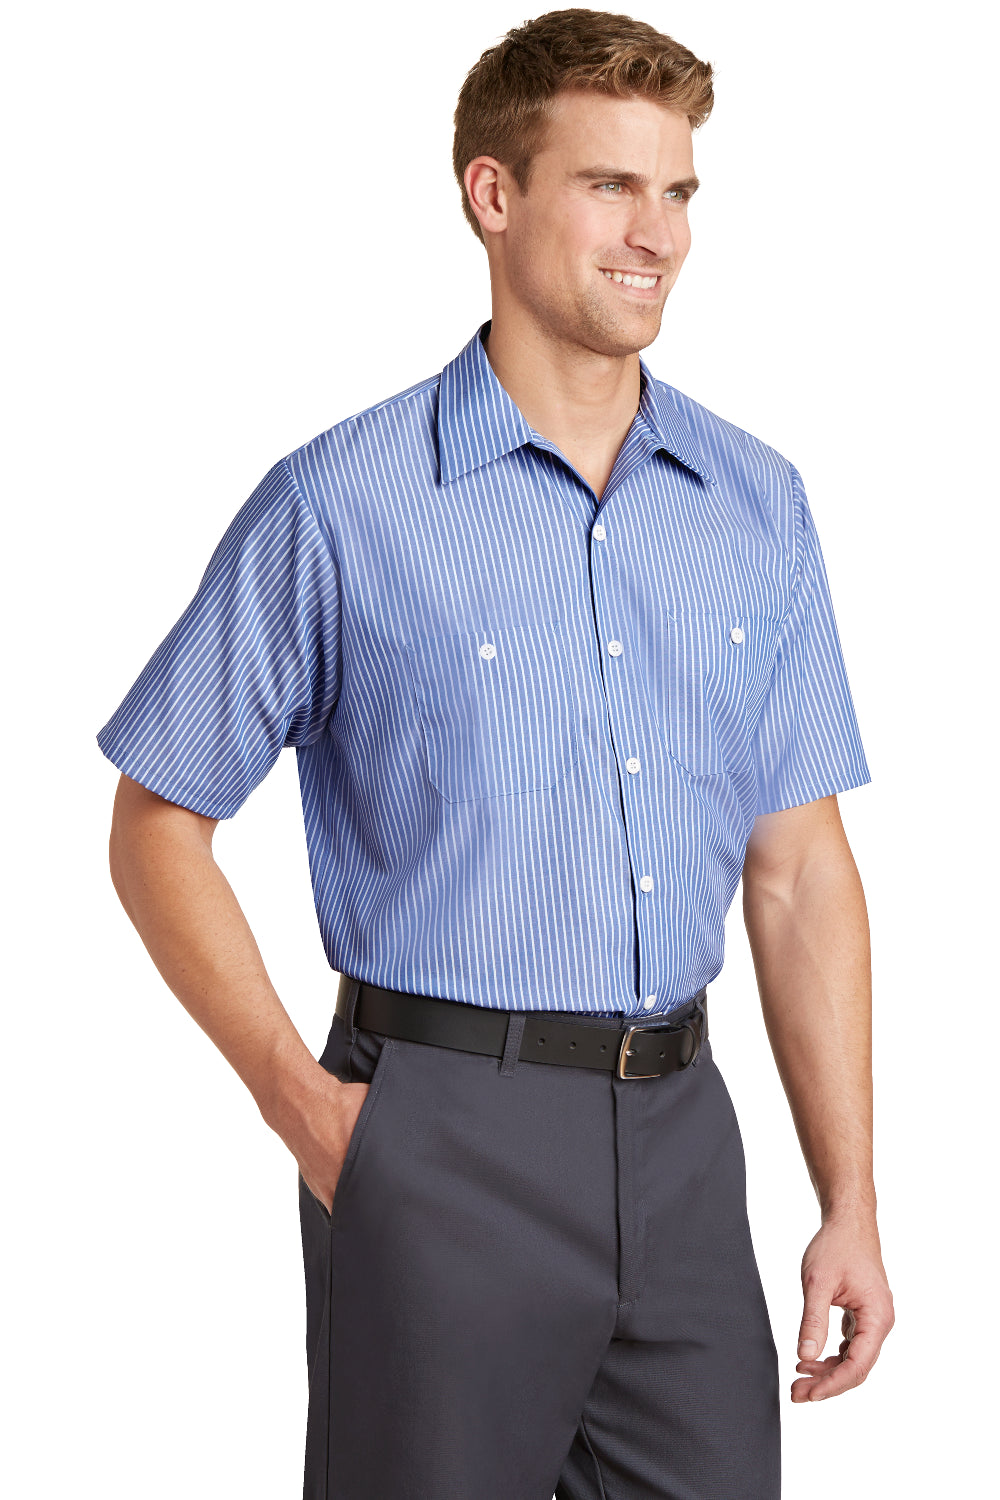 Red Kap CS20/CS20LONG Mens Industrial Moisture Wicking Short Sleeve Button Down Shirt w/ Double Pockets Blue/White 3Q